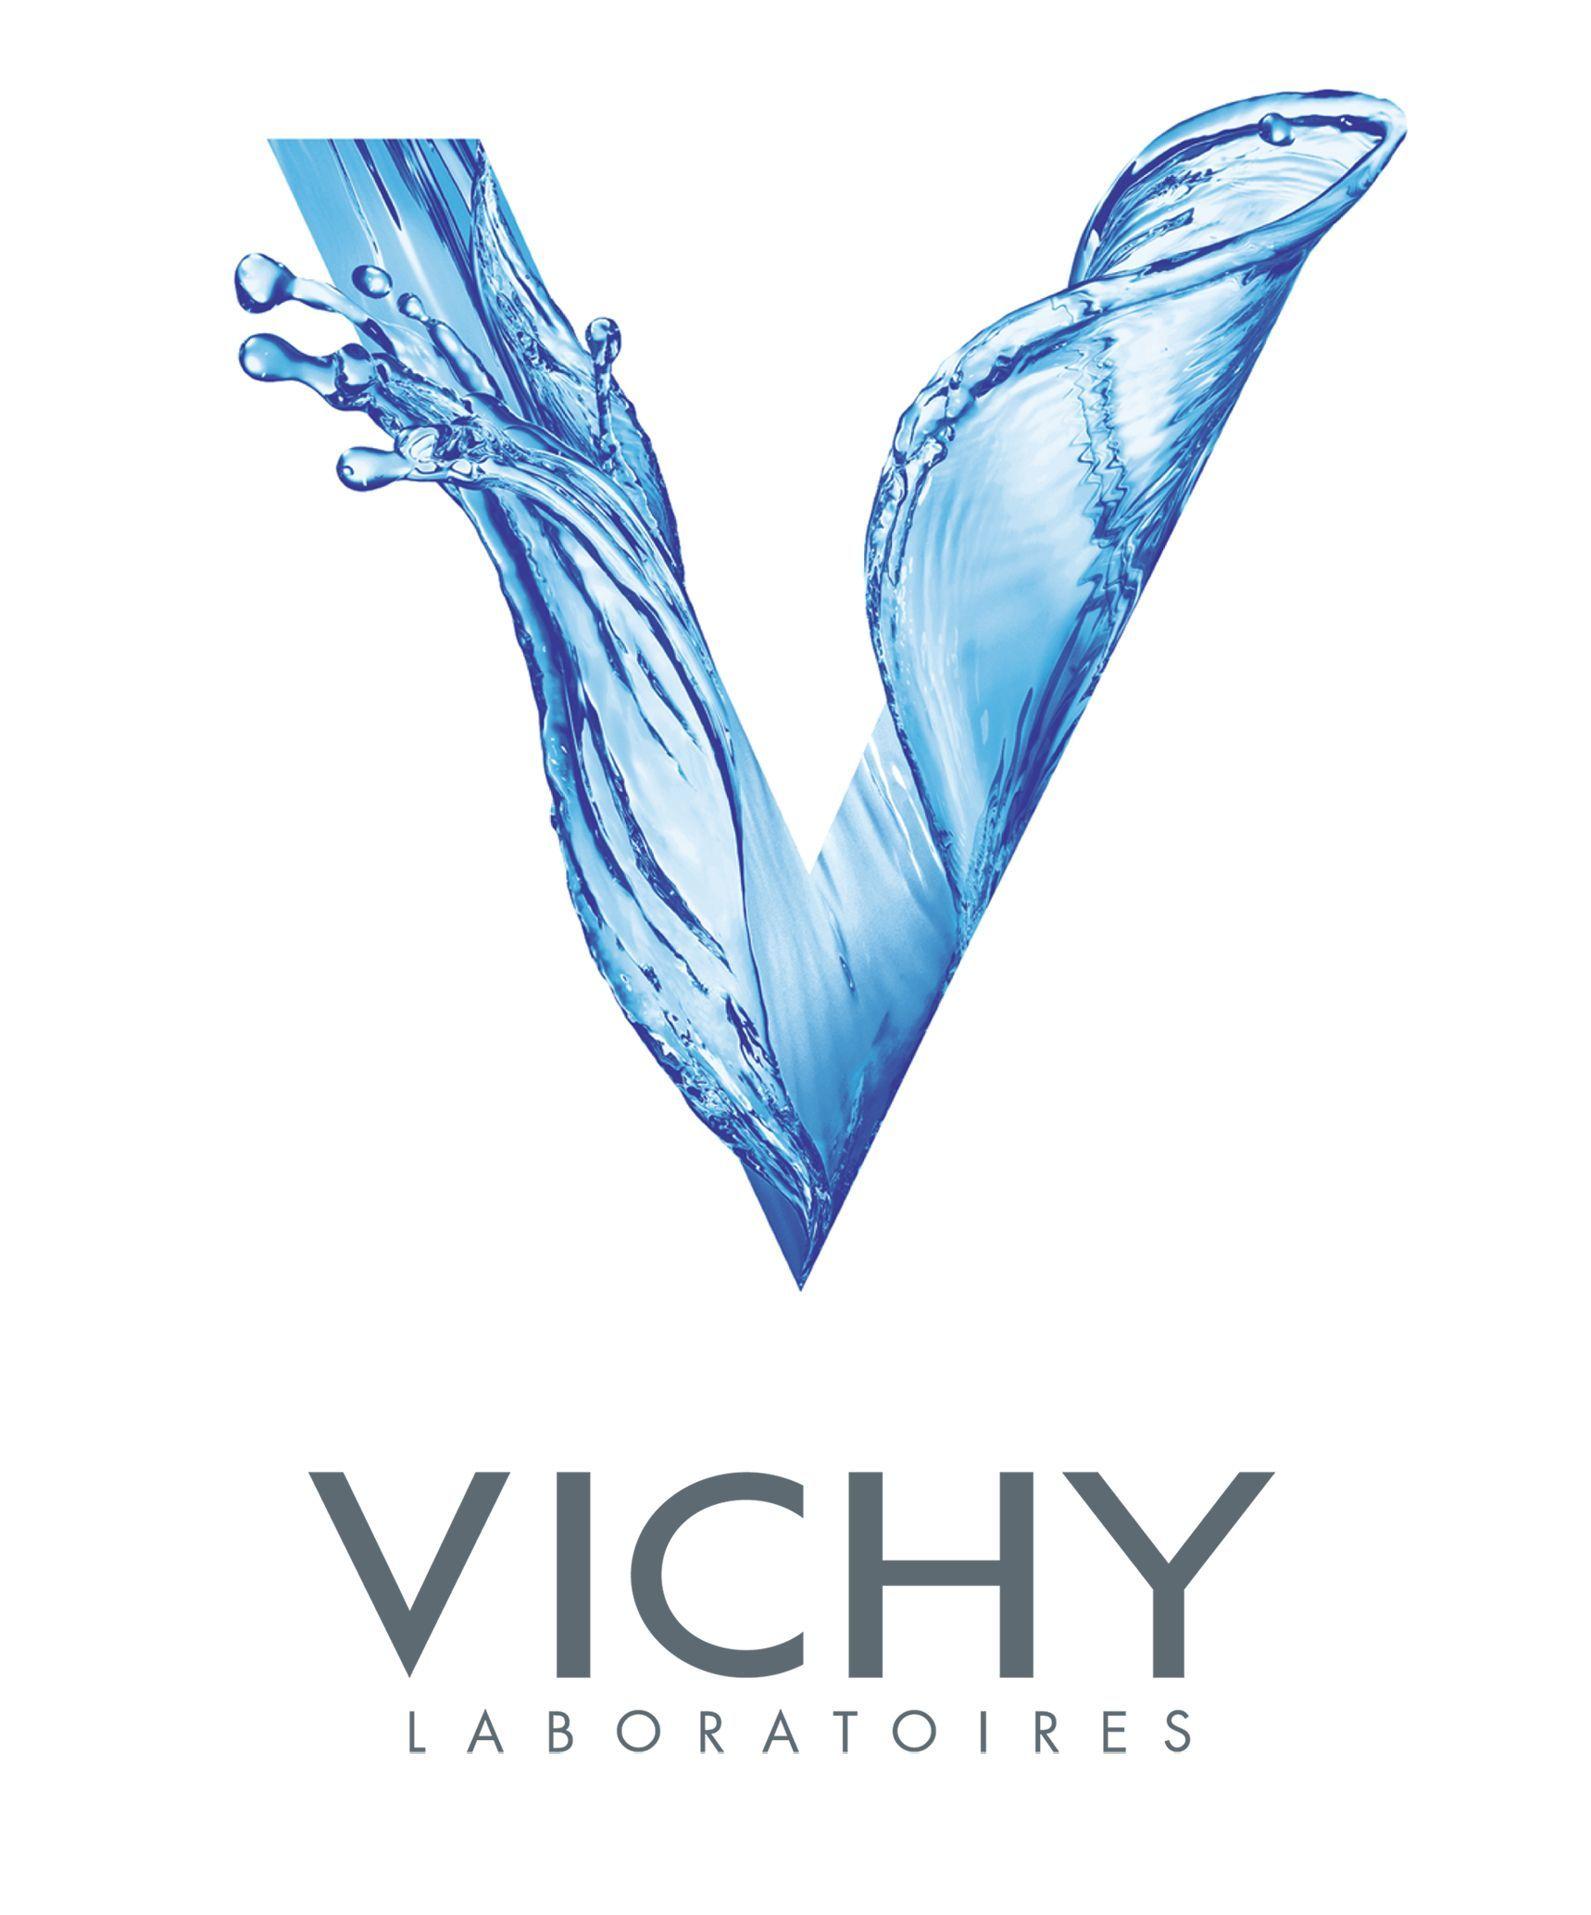 Vichy Logo - vichy logo images - Google Search | MSC-566 Brand Collage | Logo ...